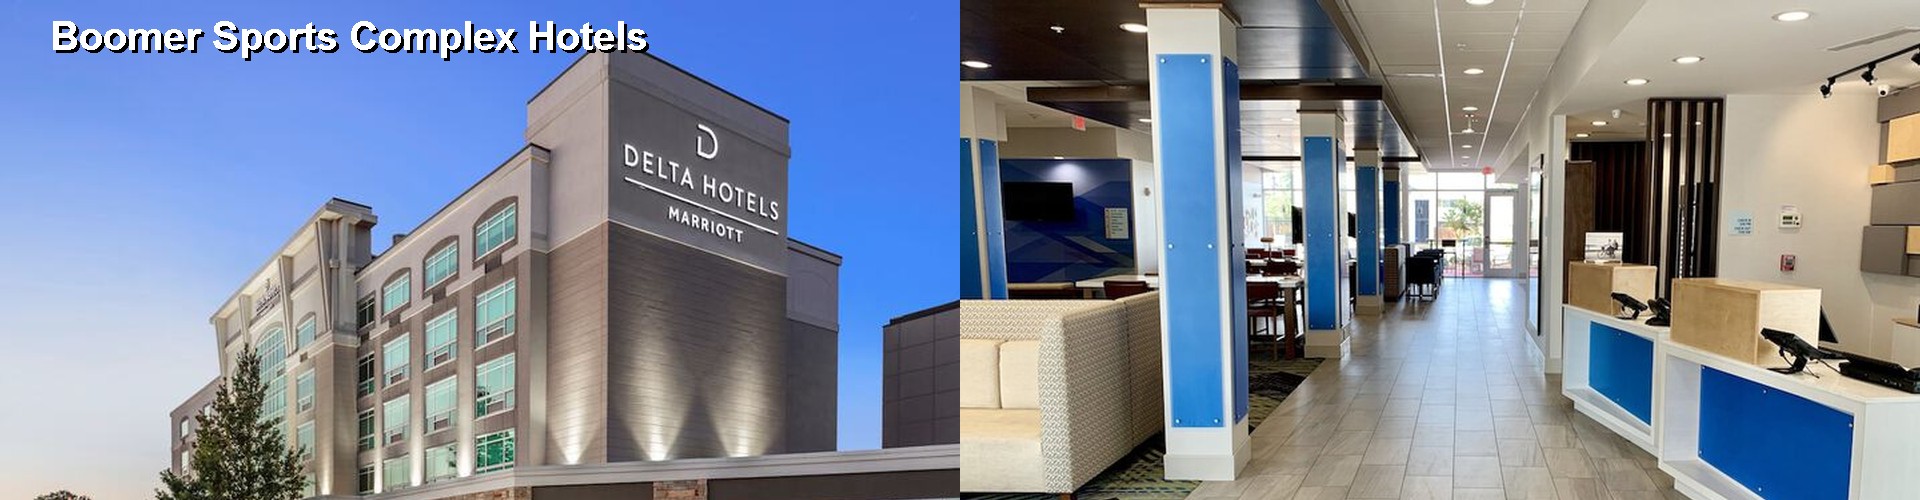 2 Best Hotels near Boomer Sports Complex